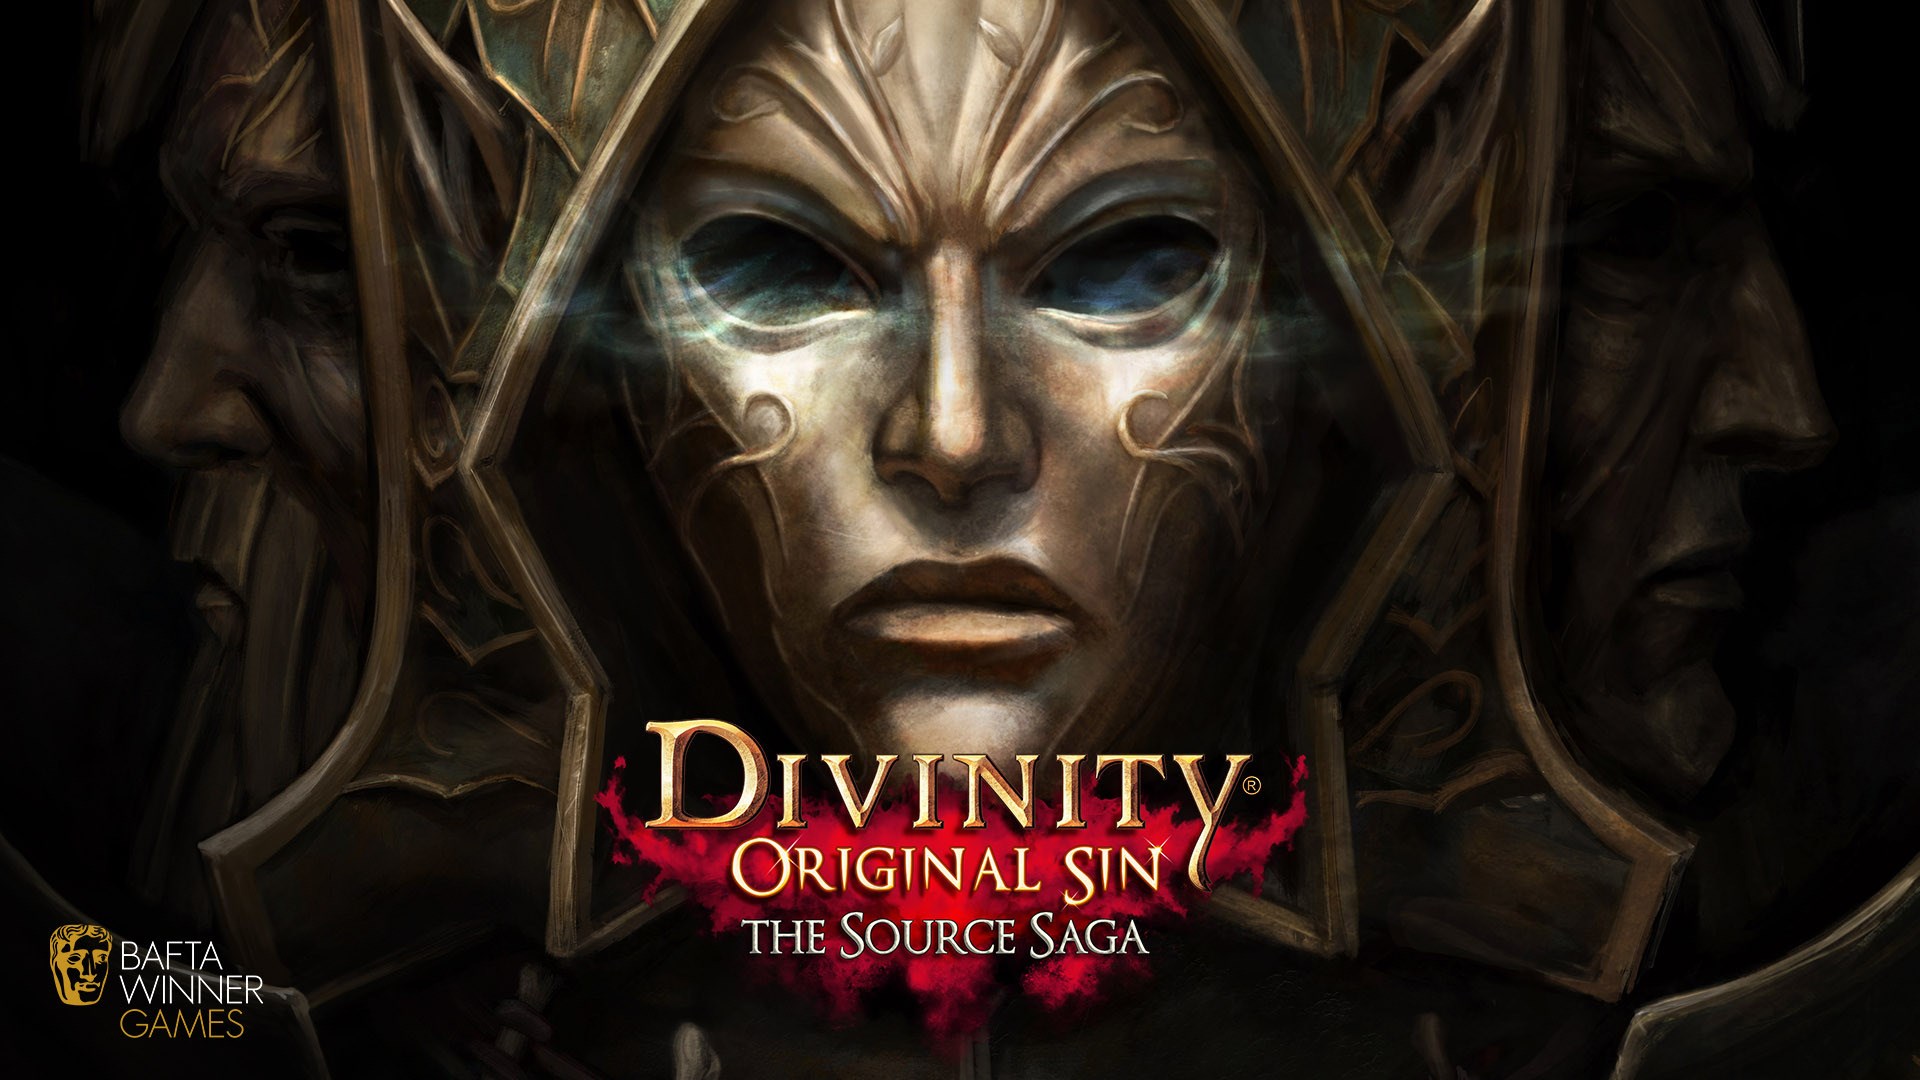 Games of the Year 2019: Divinity: Original Sin II